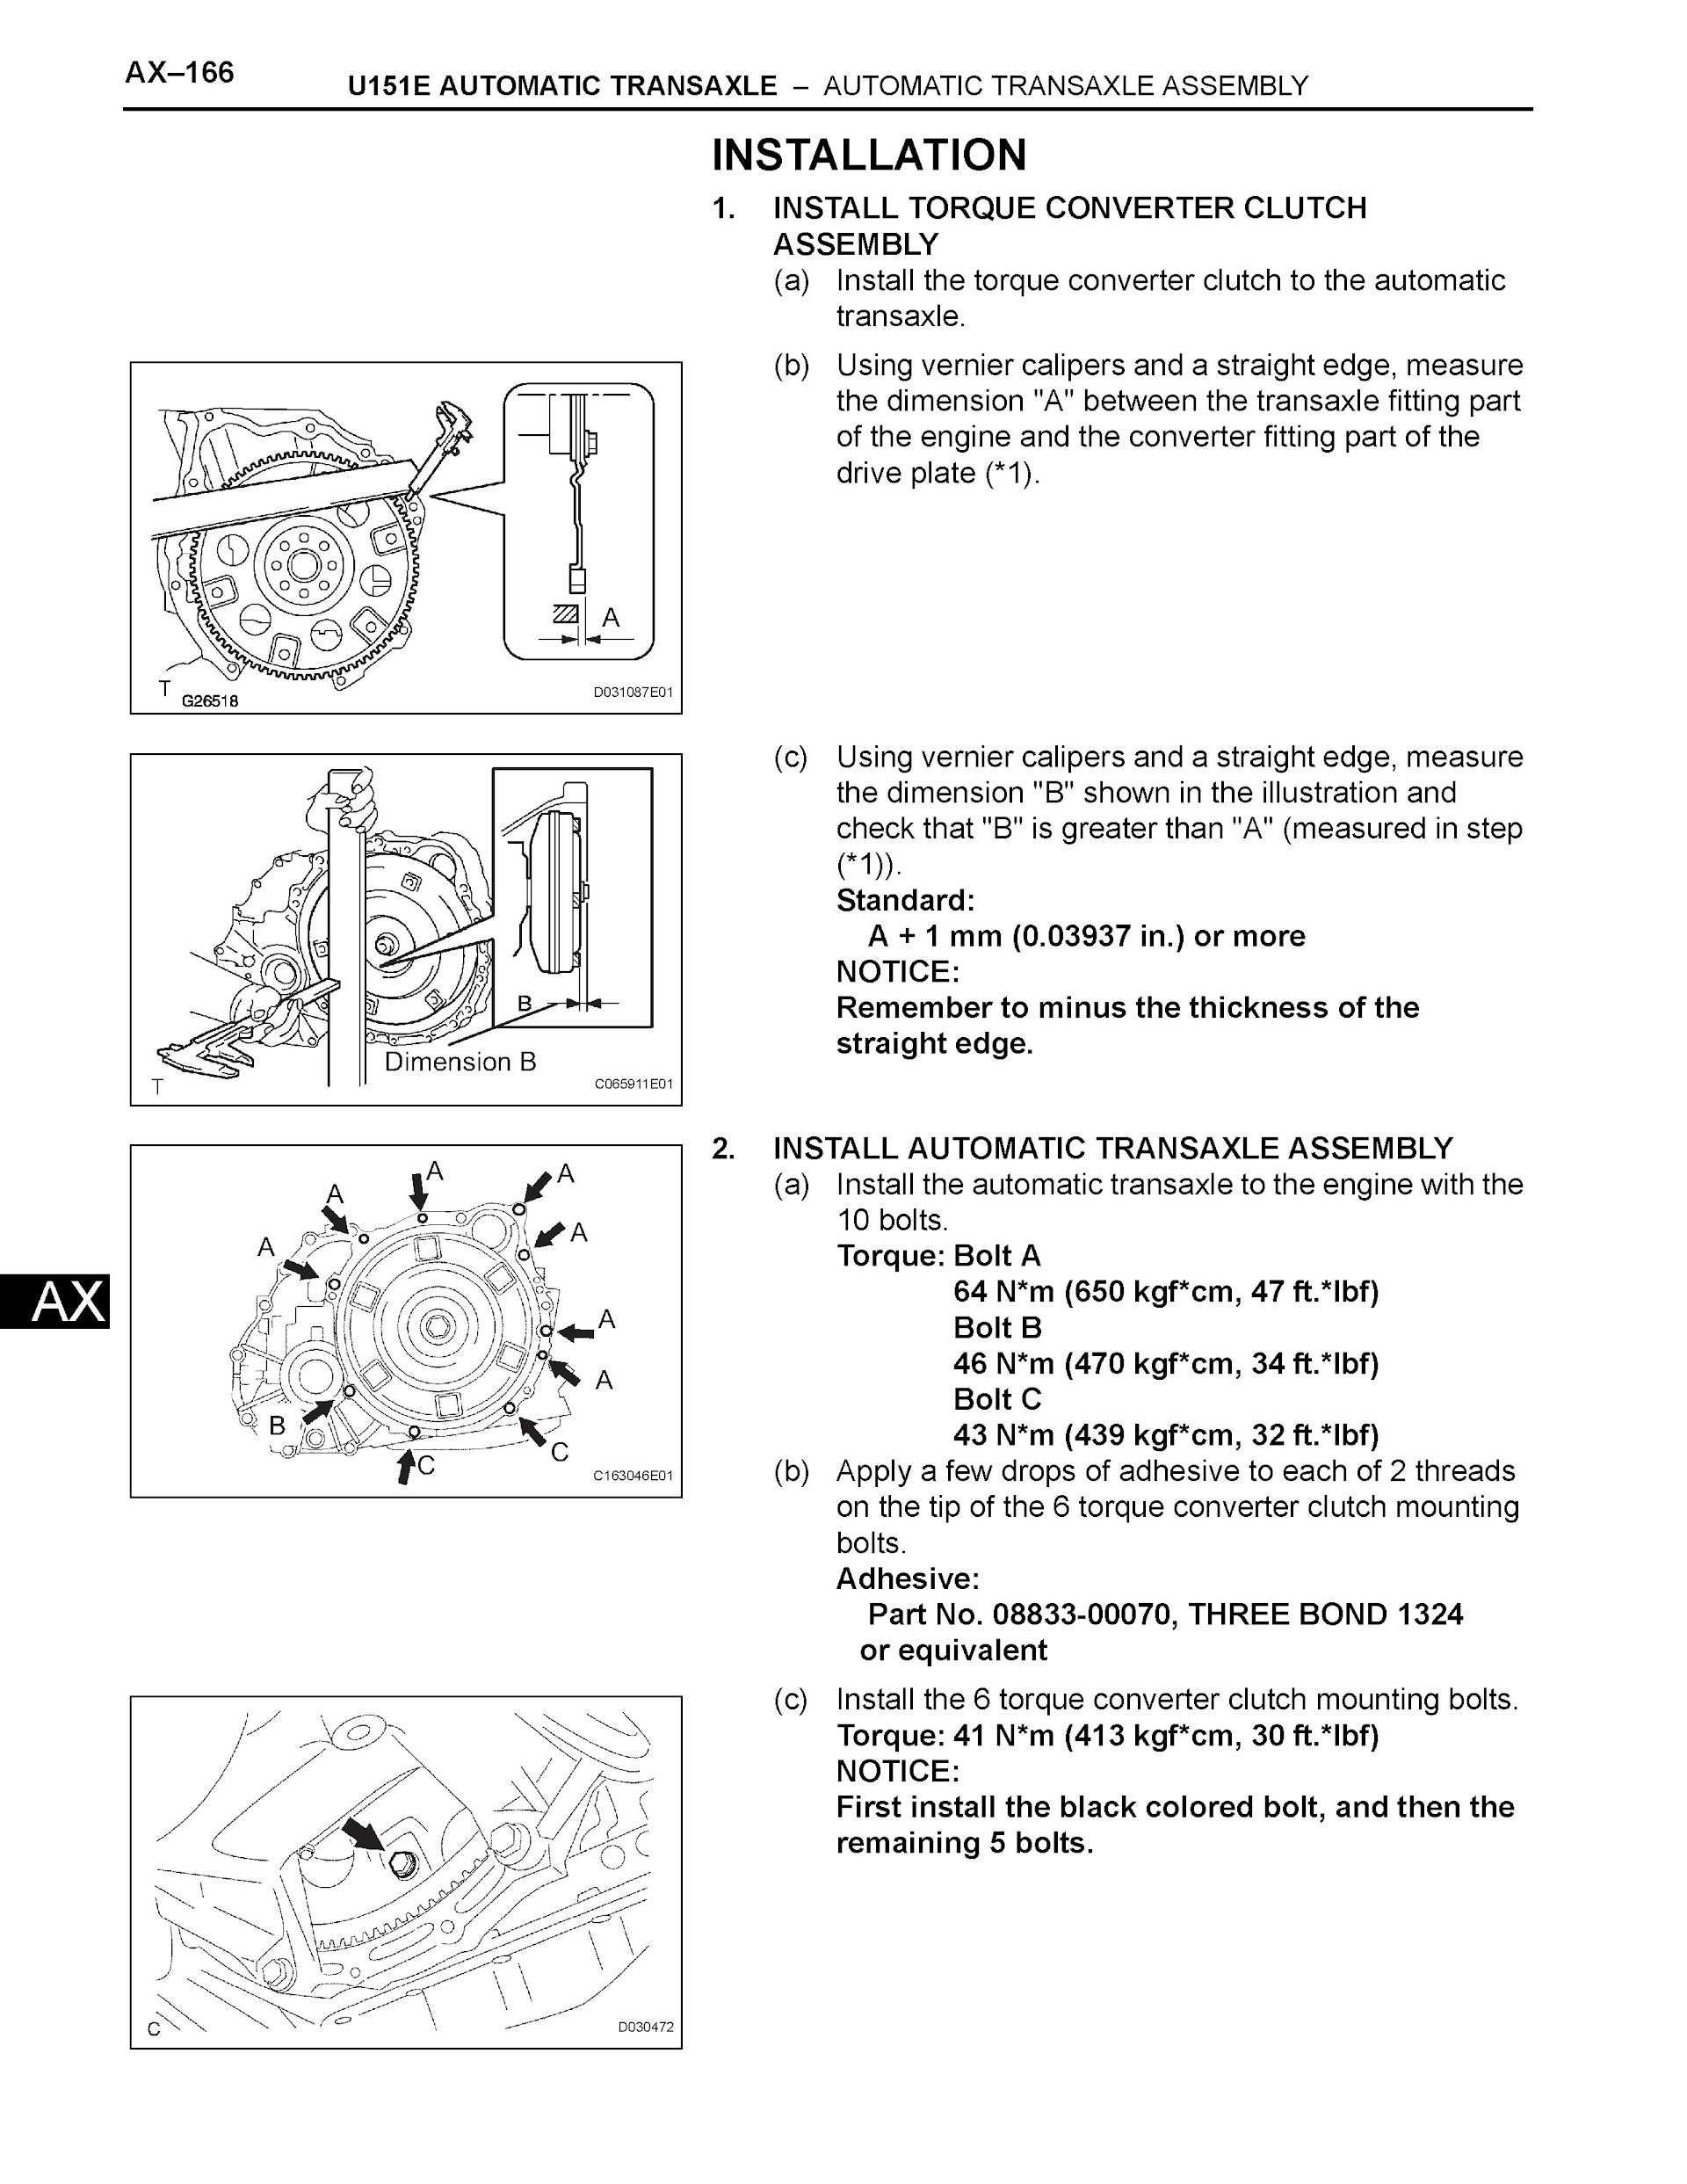 2007 Toyota Sienna Repair Manual, U151E Automatic Transaxle